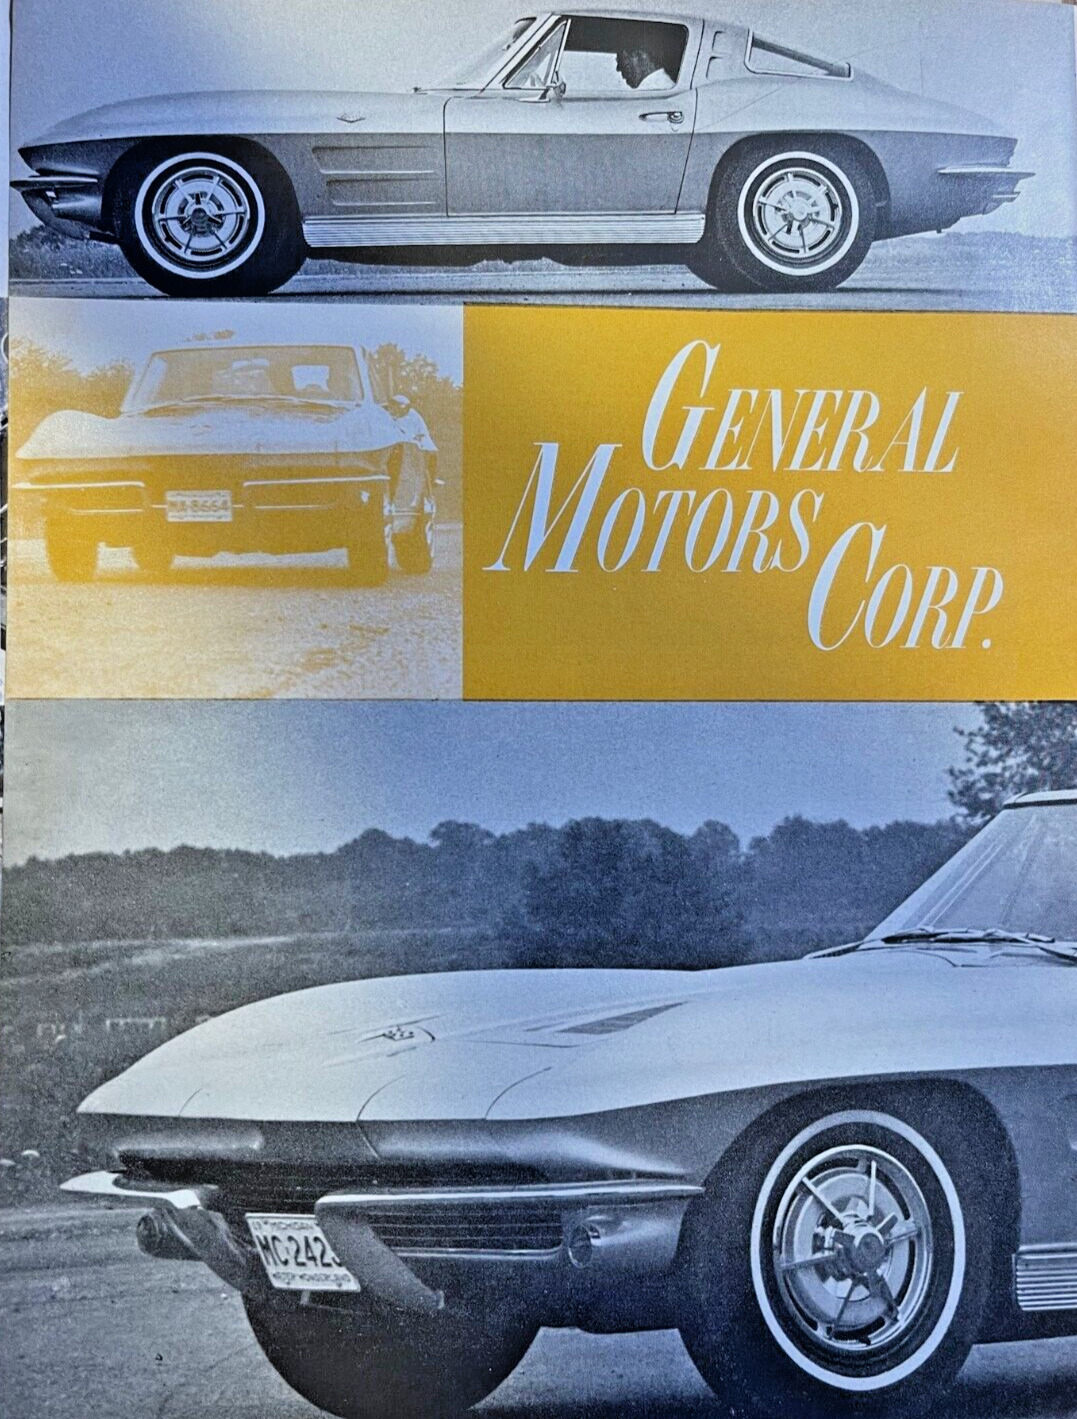 1962 General Motors Line Up For 1963 Automobiles